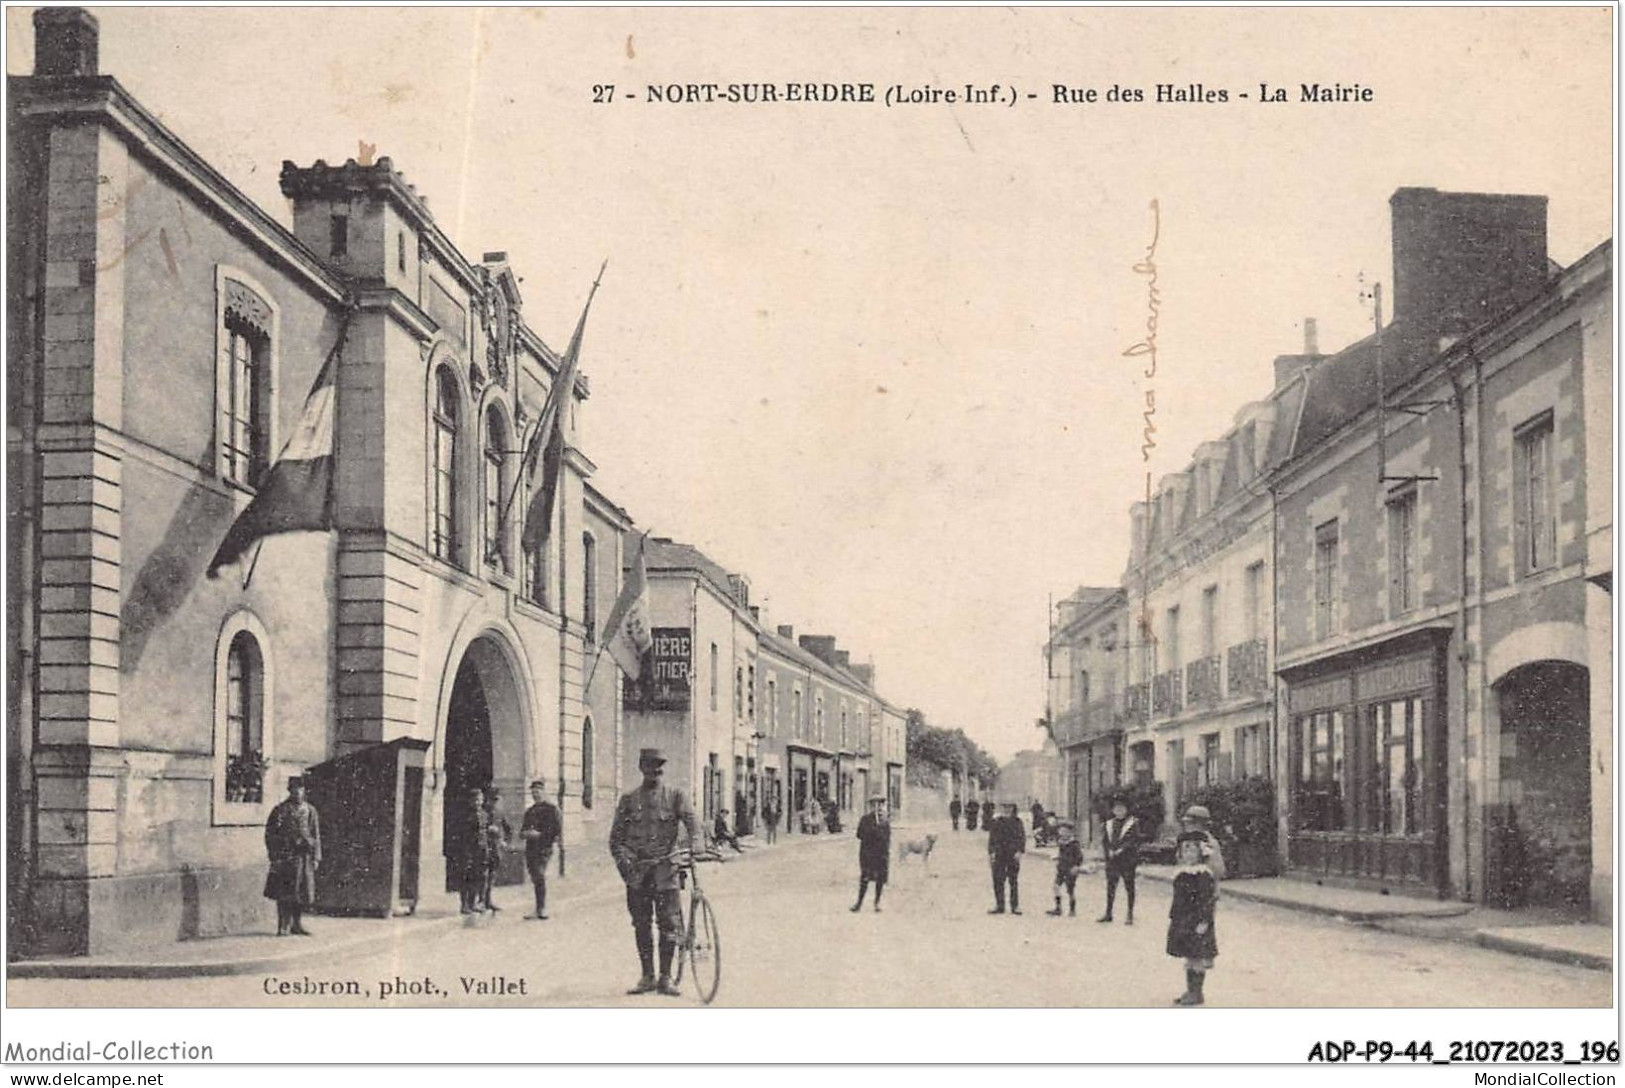 ADPP9-44-0861 - NORT-SUR-ERDRE - Rue Des Halles - La Mairie - Nort Sur Erdre